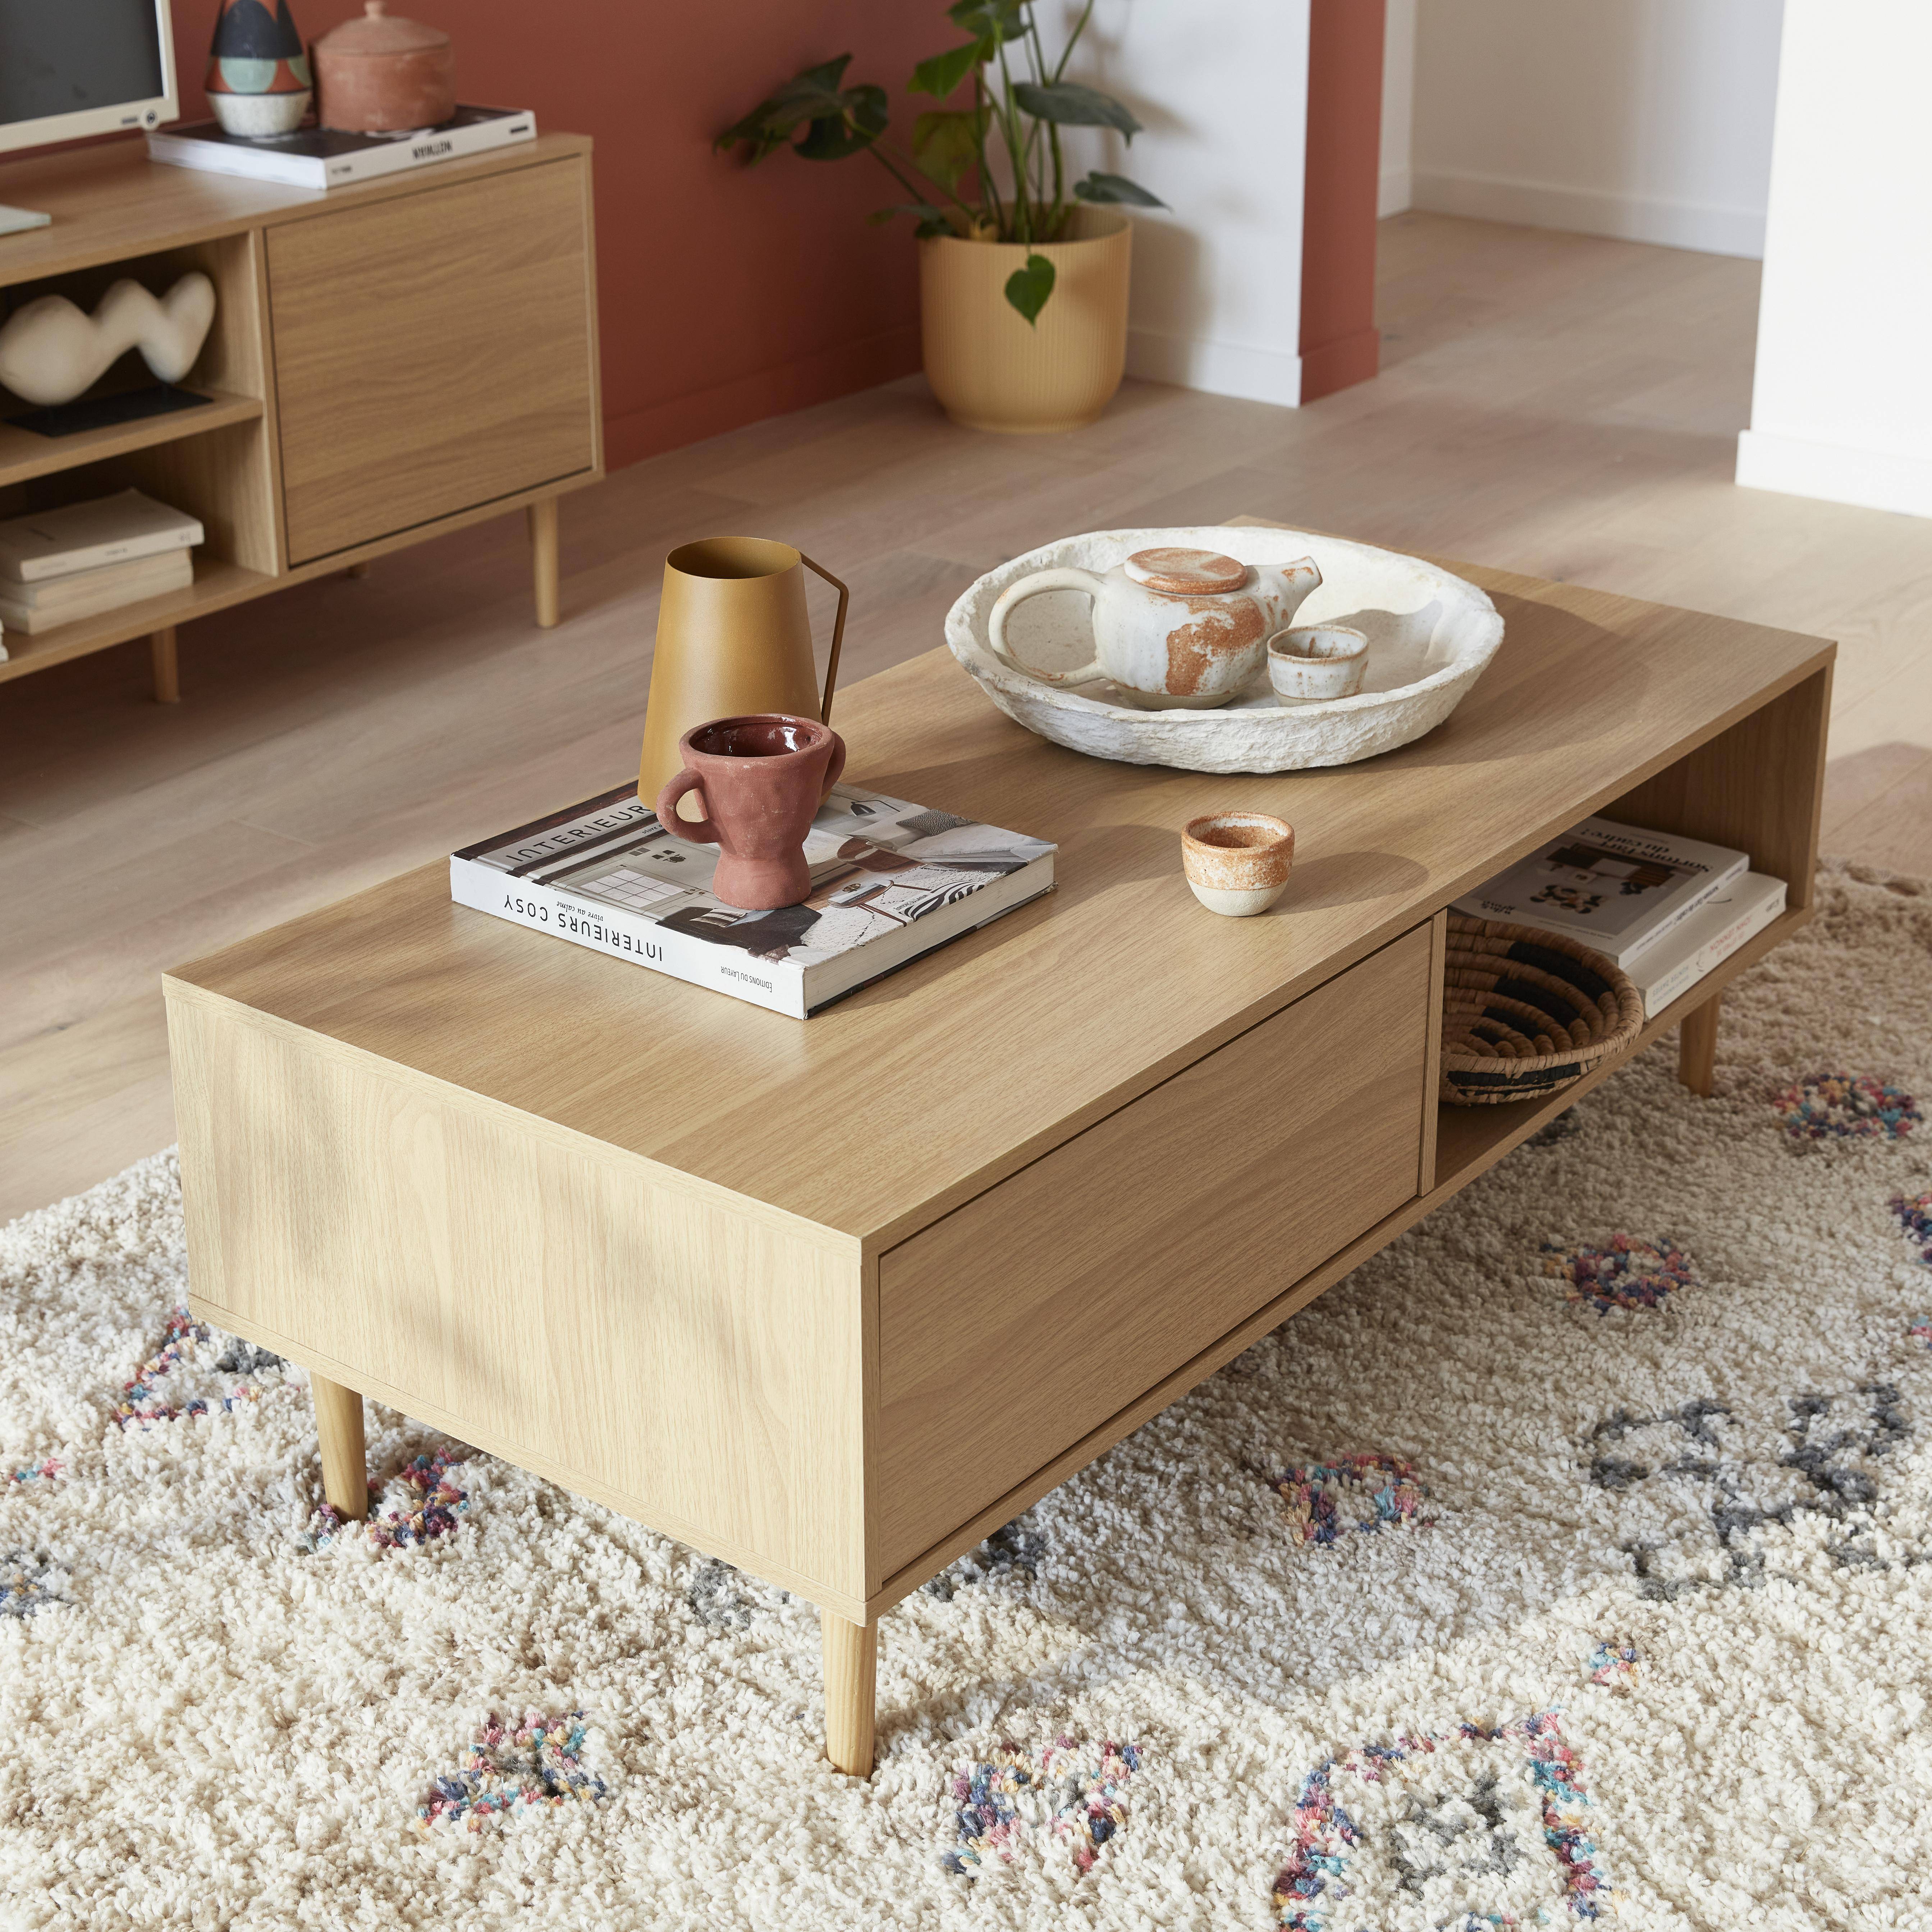 Wood-effect coffee table, 120x55x40cm, Mika, Natural wood colour,sweeek,Photo1